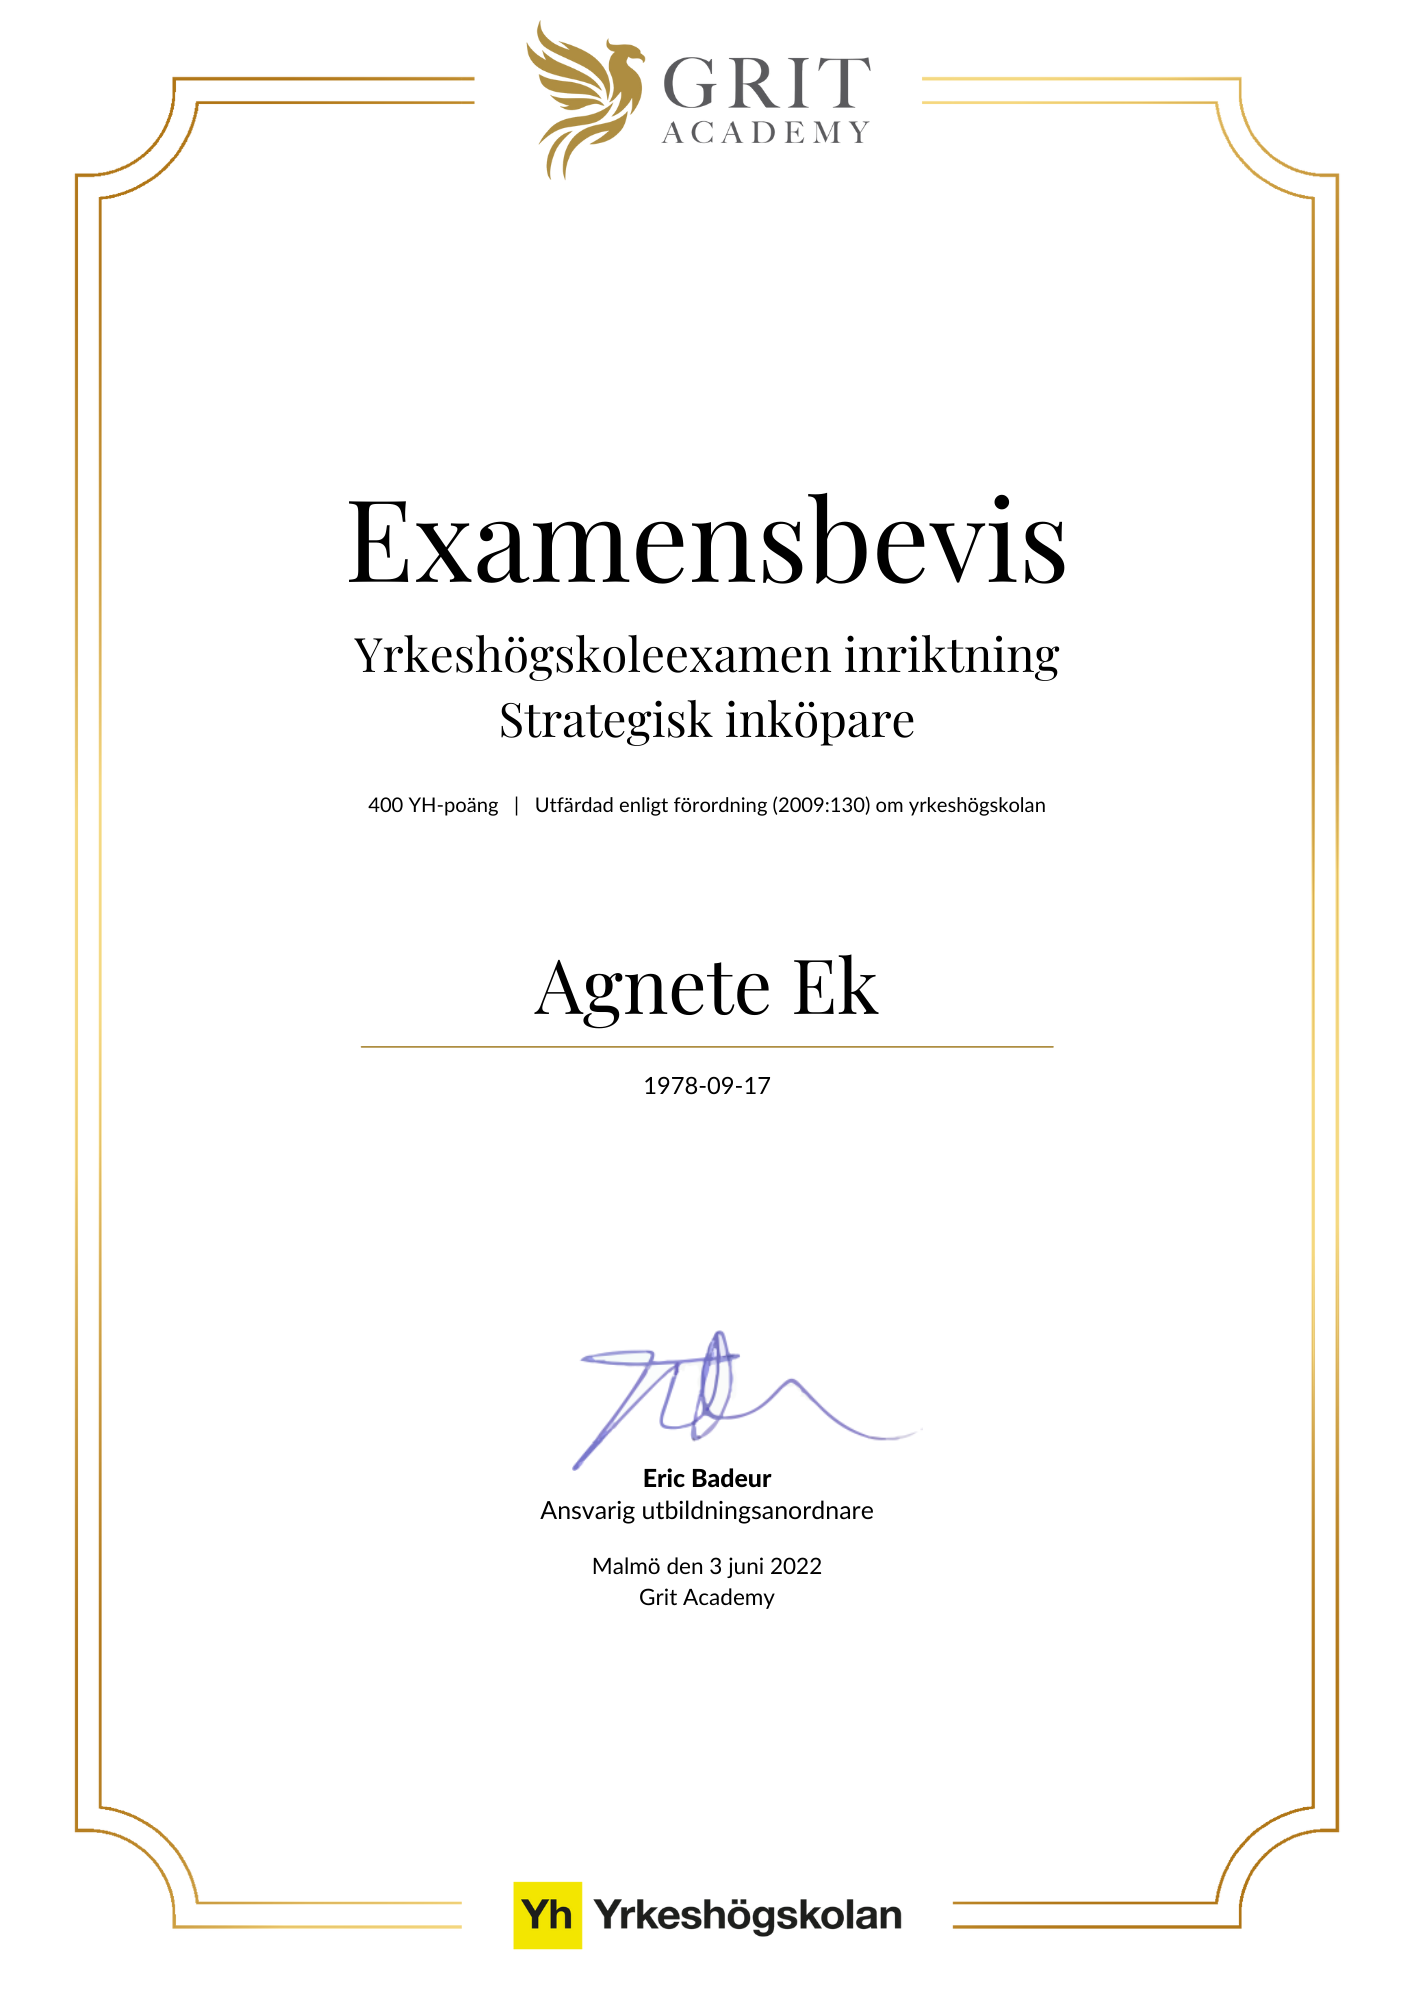 Examensbevis Agnete Ek - 1